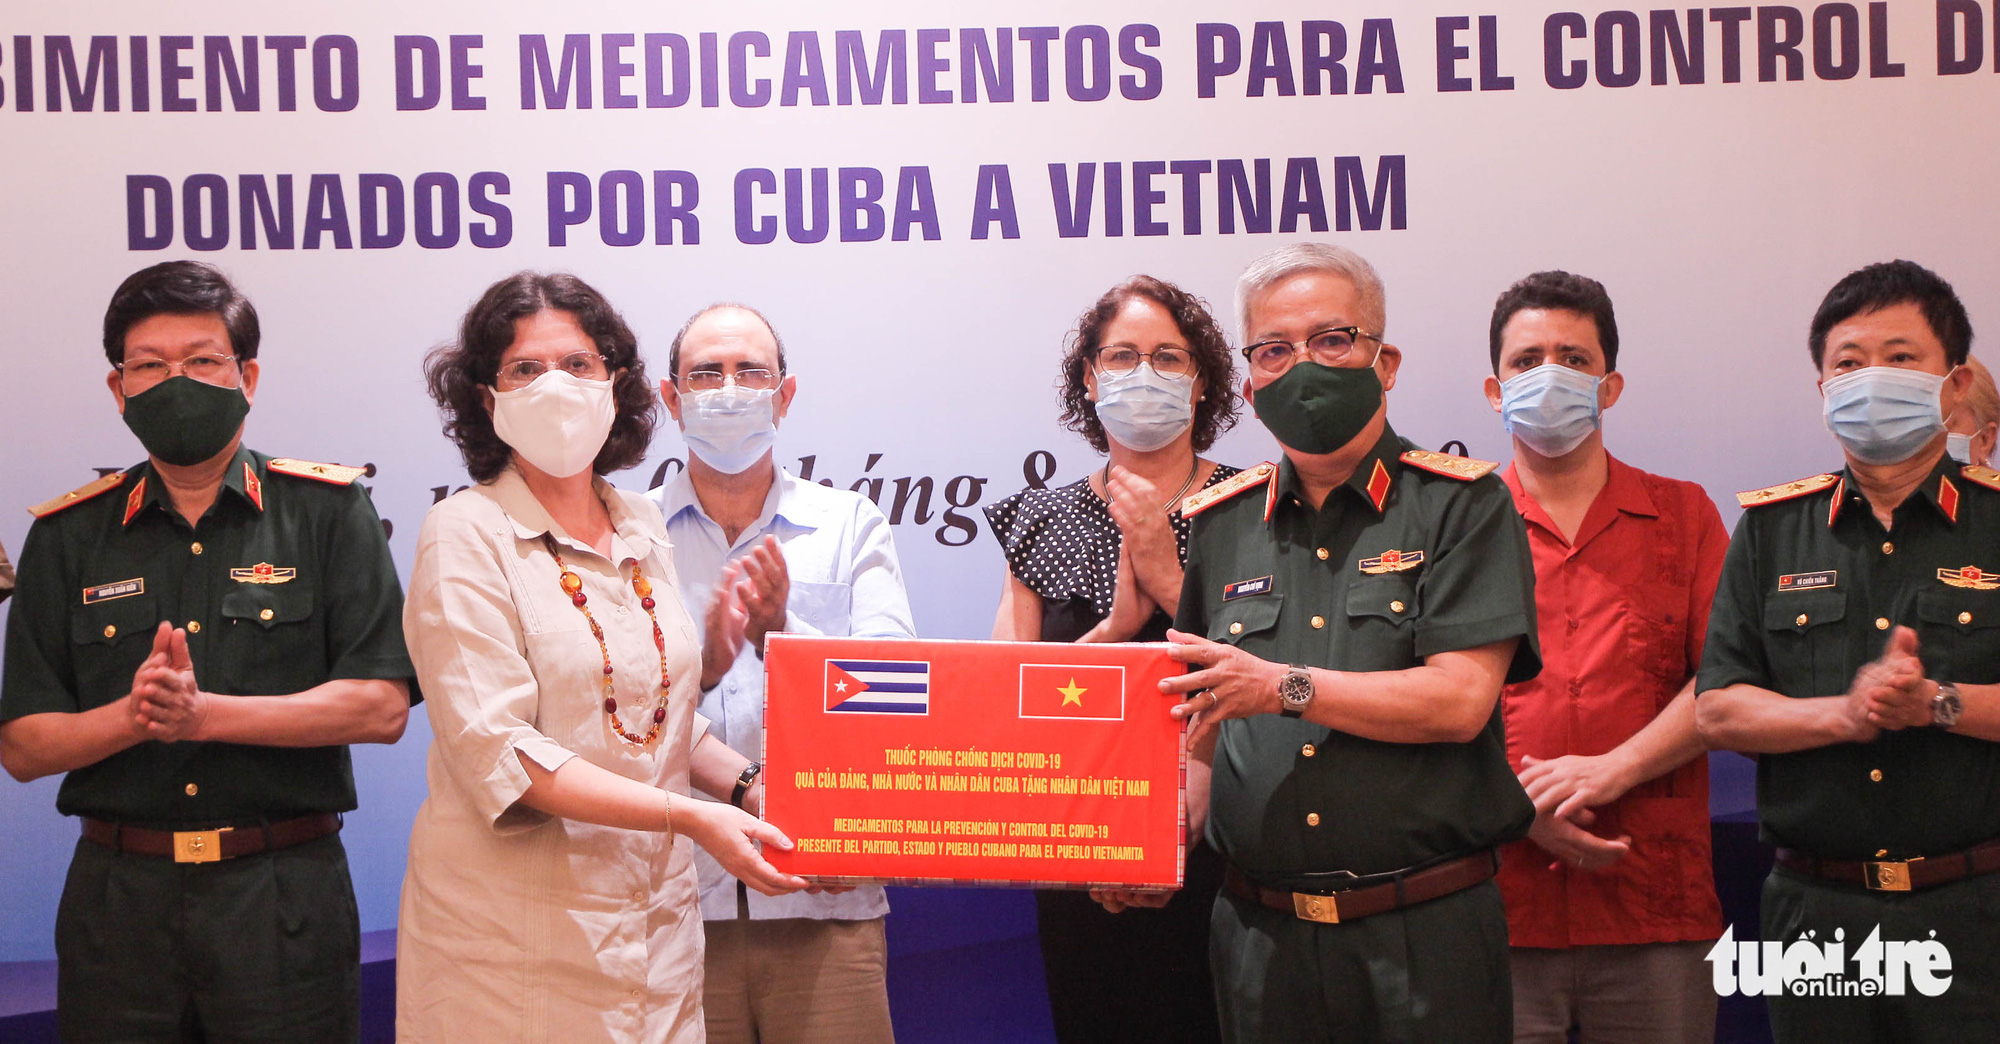 Cuba sends medicine, health experts to Vietnam for COVID-19 fight